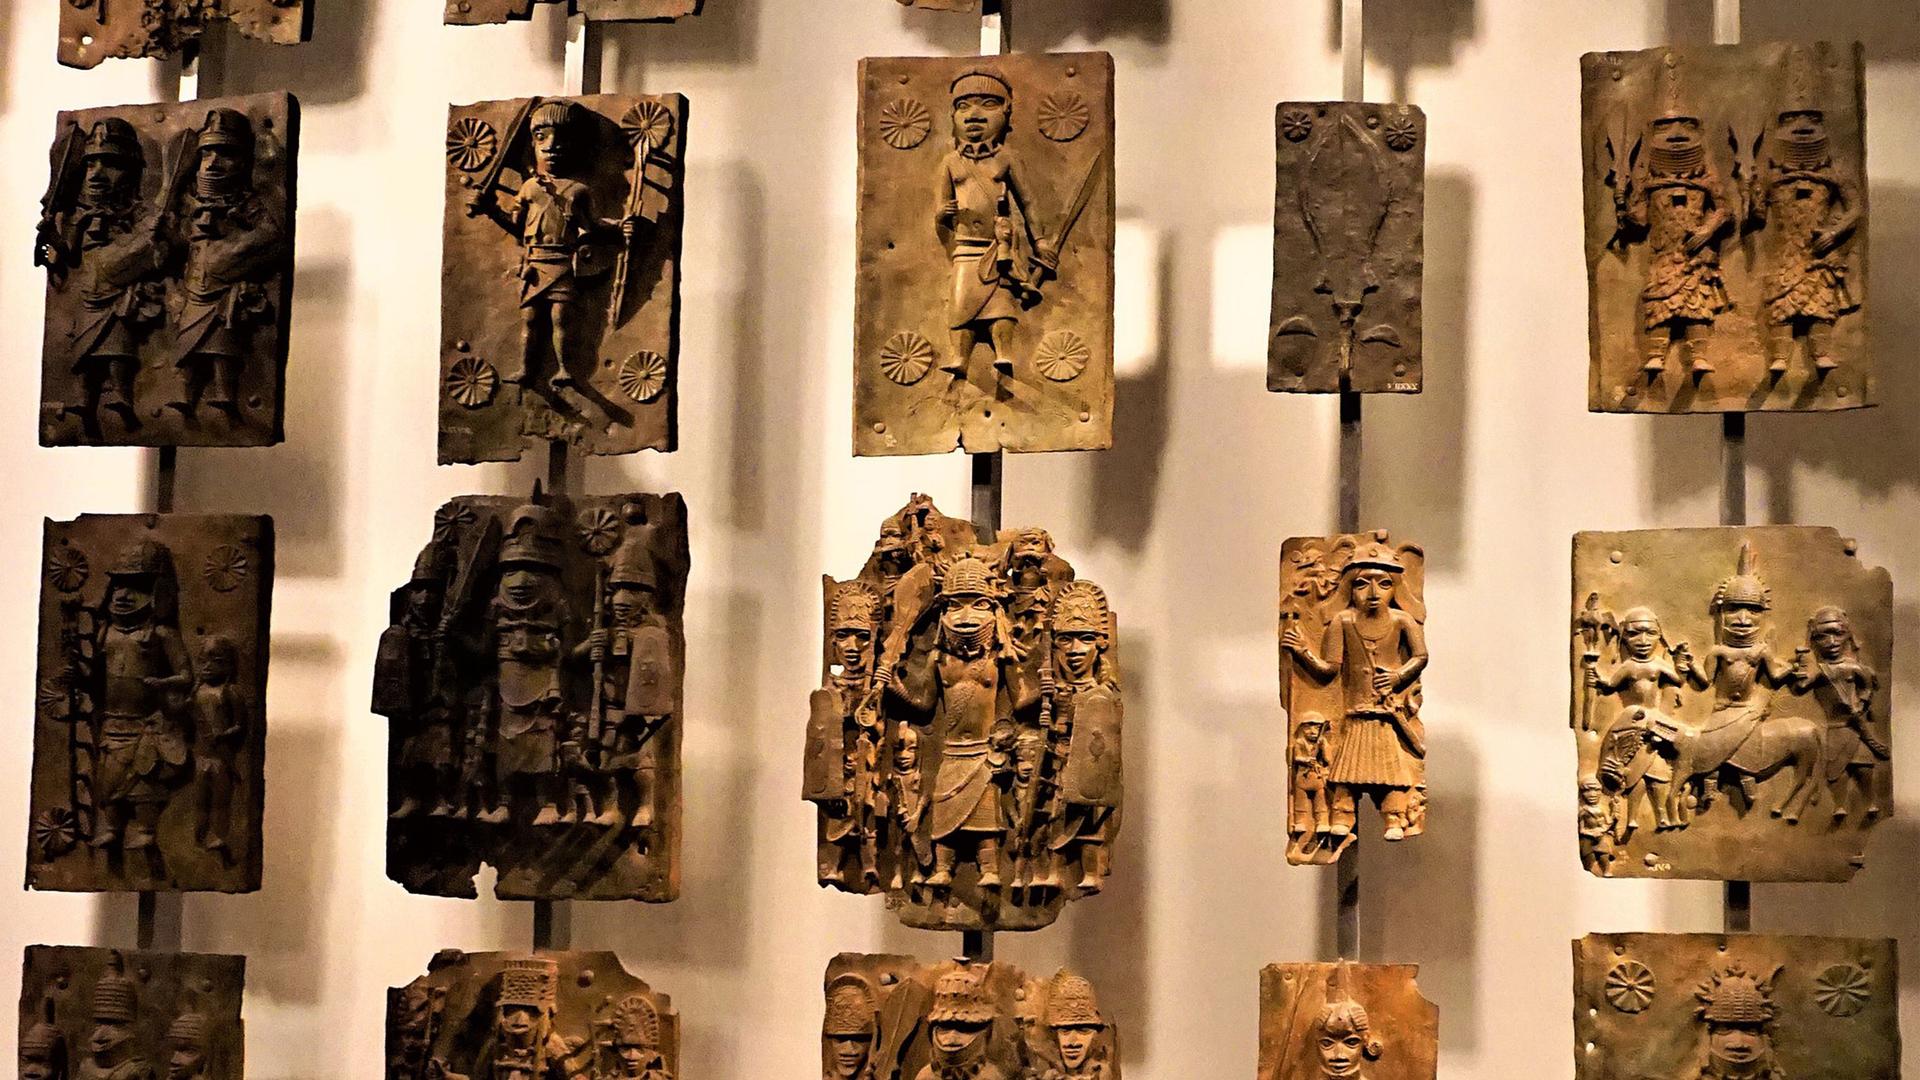 Benin Bronzes on exhibit at the British Museum.